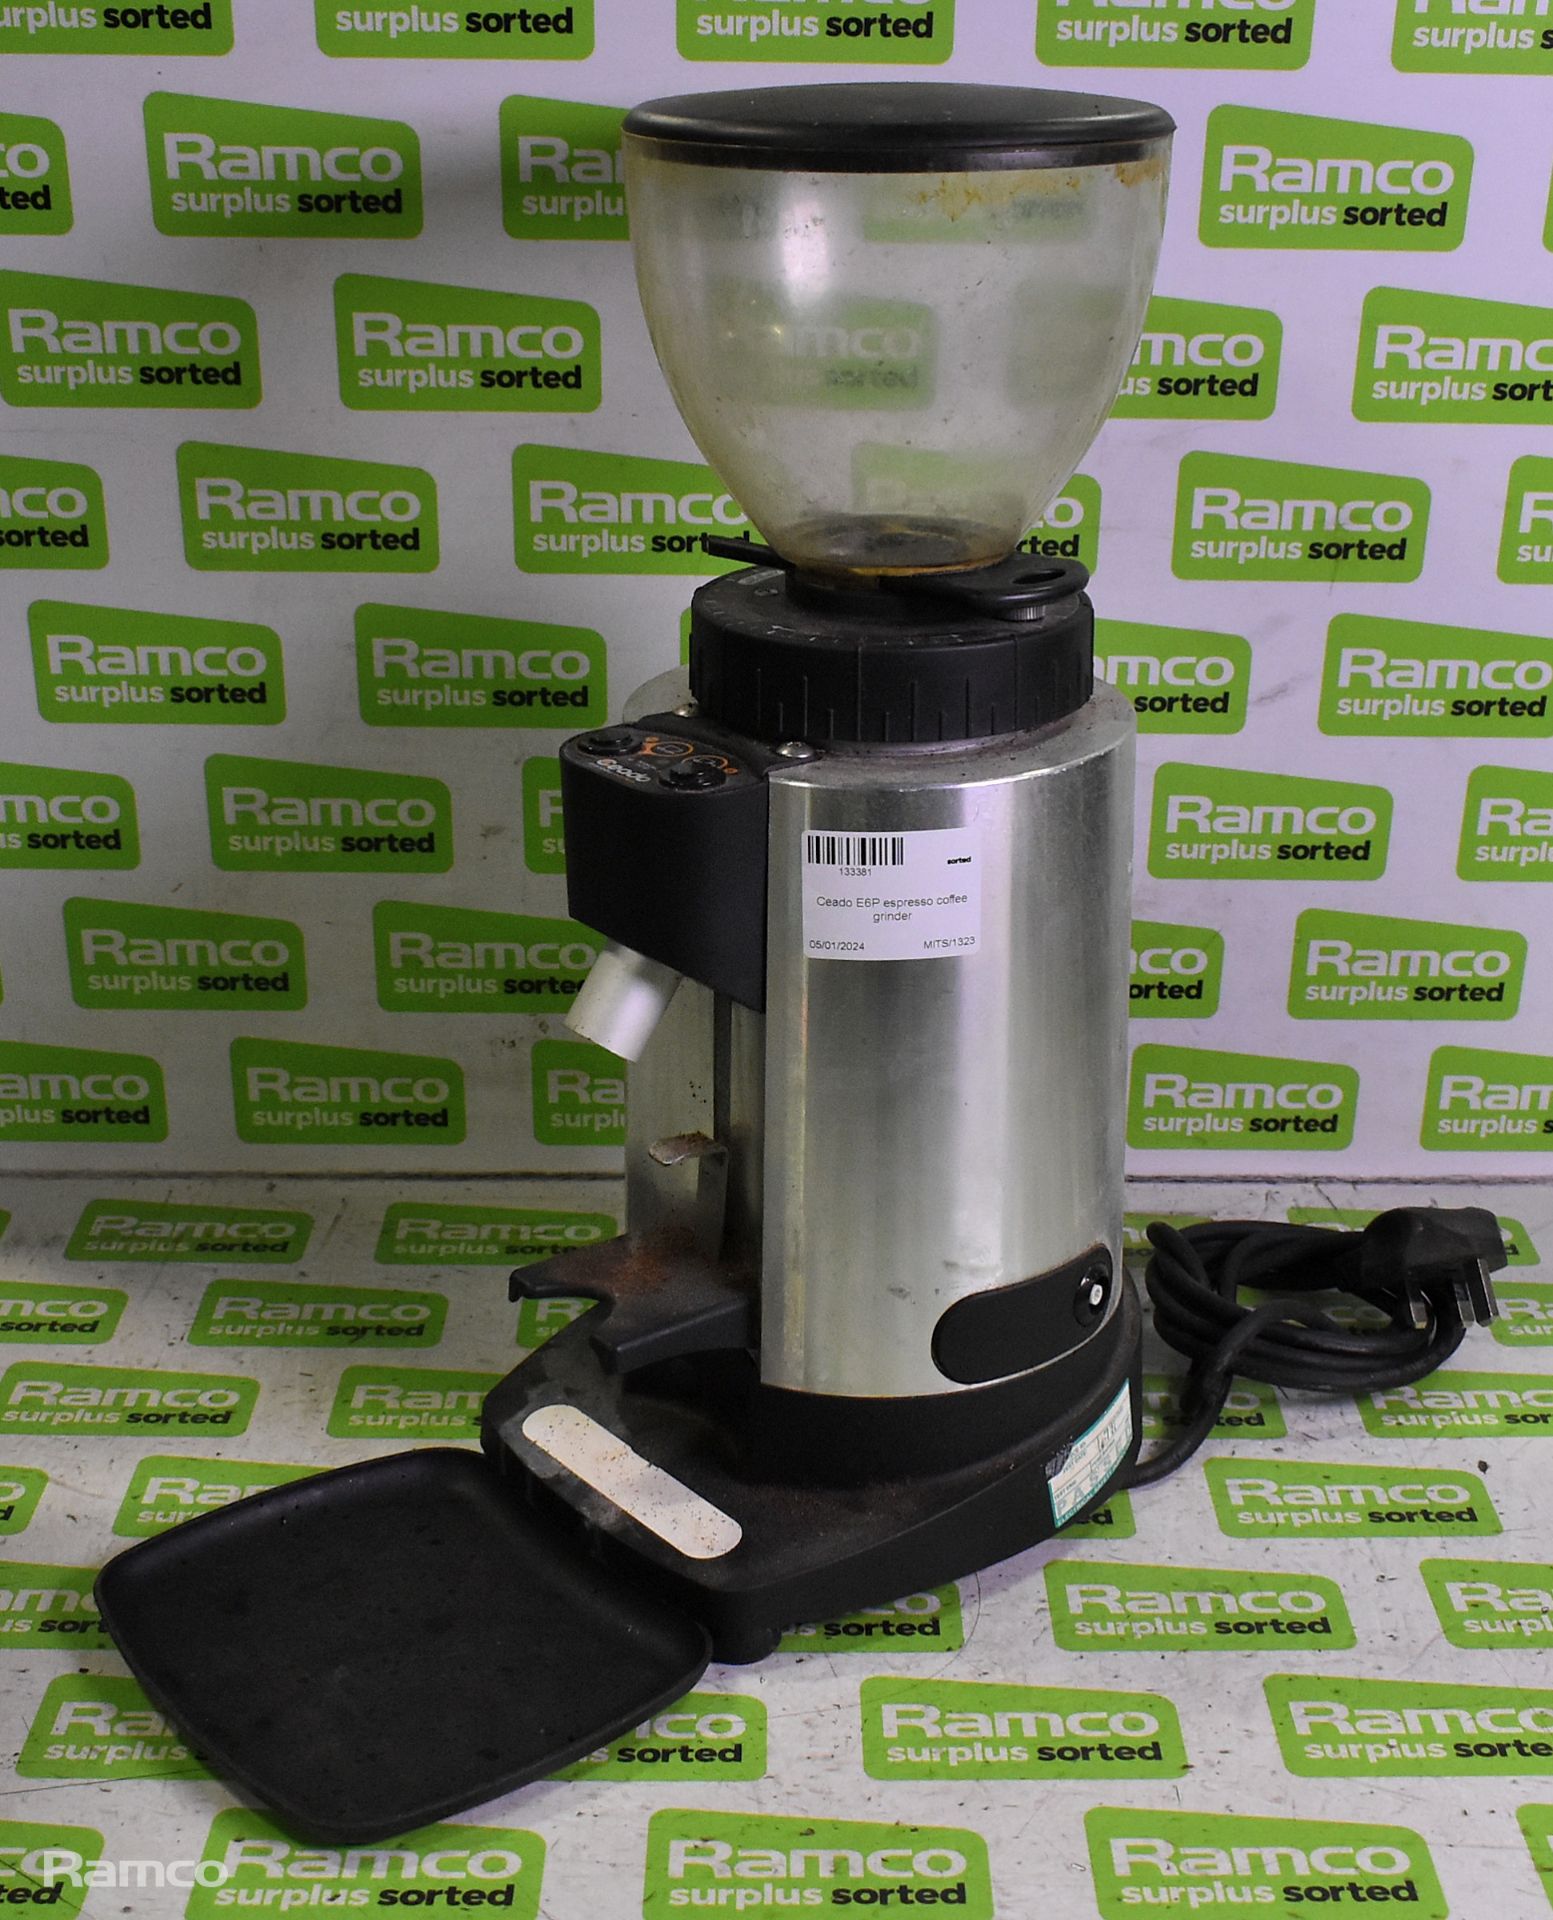 2x Ceado E6P espresso coffee grinders - Image 2 of 6